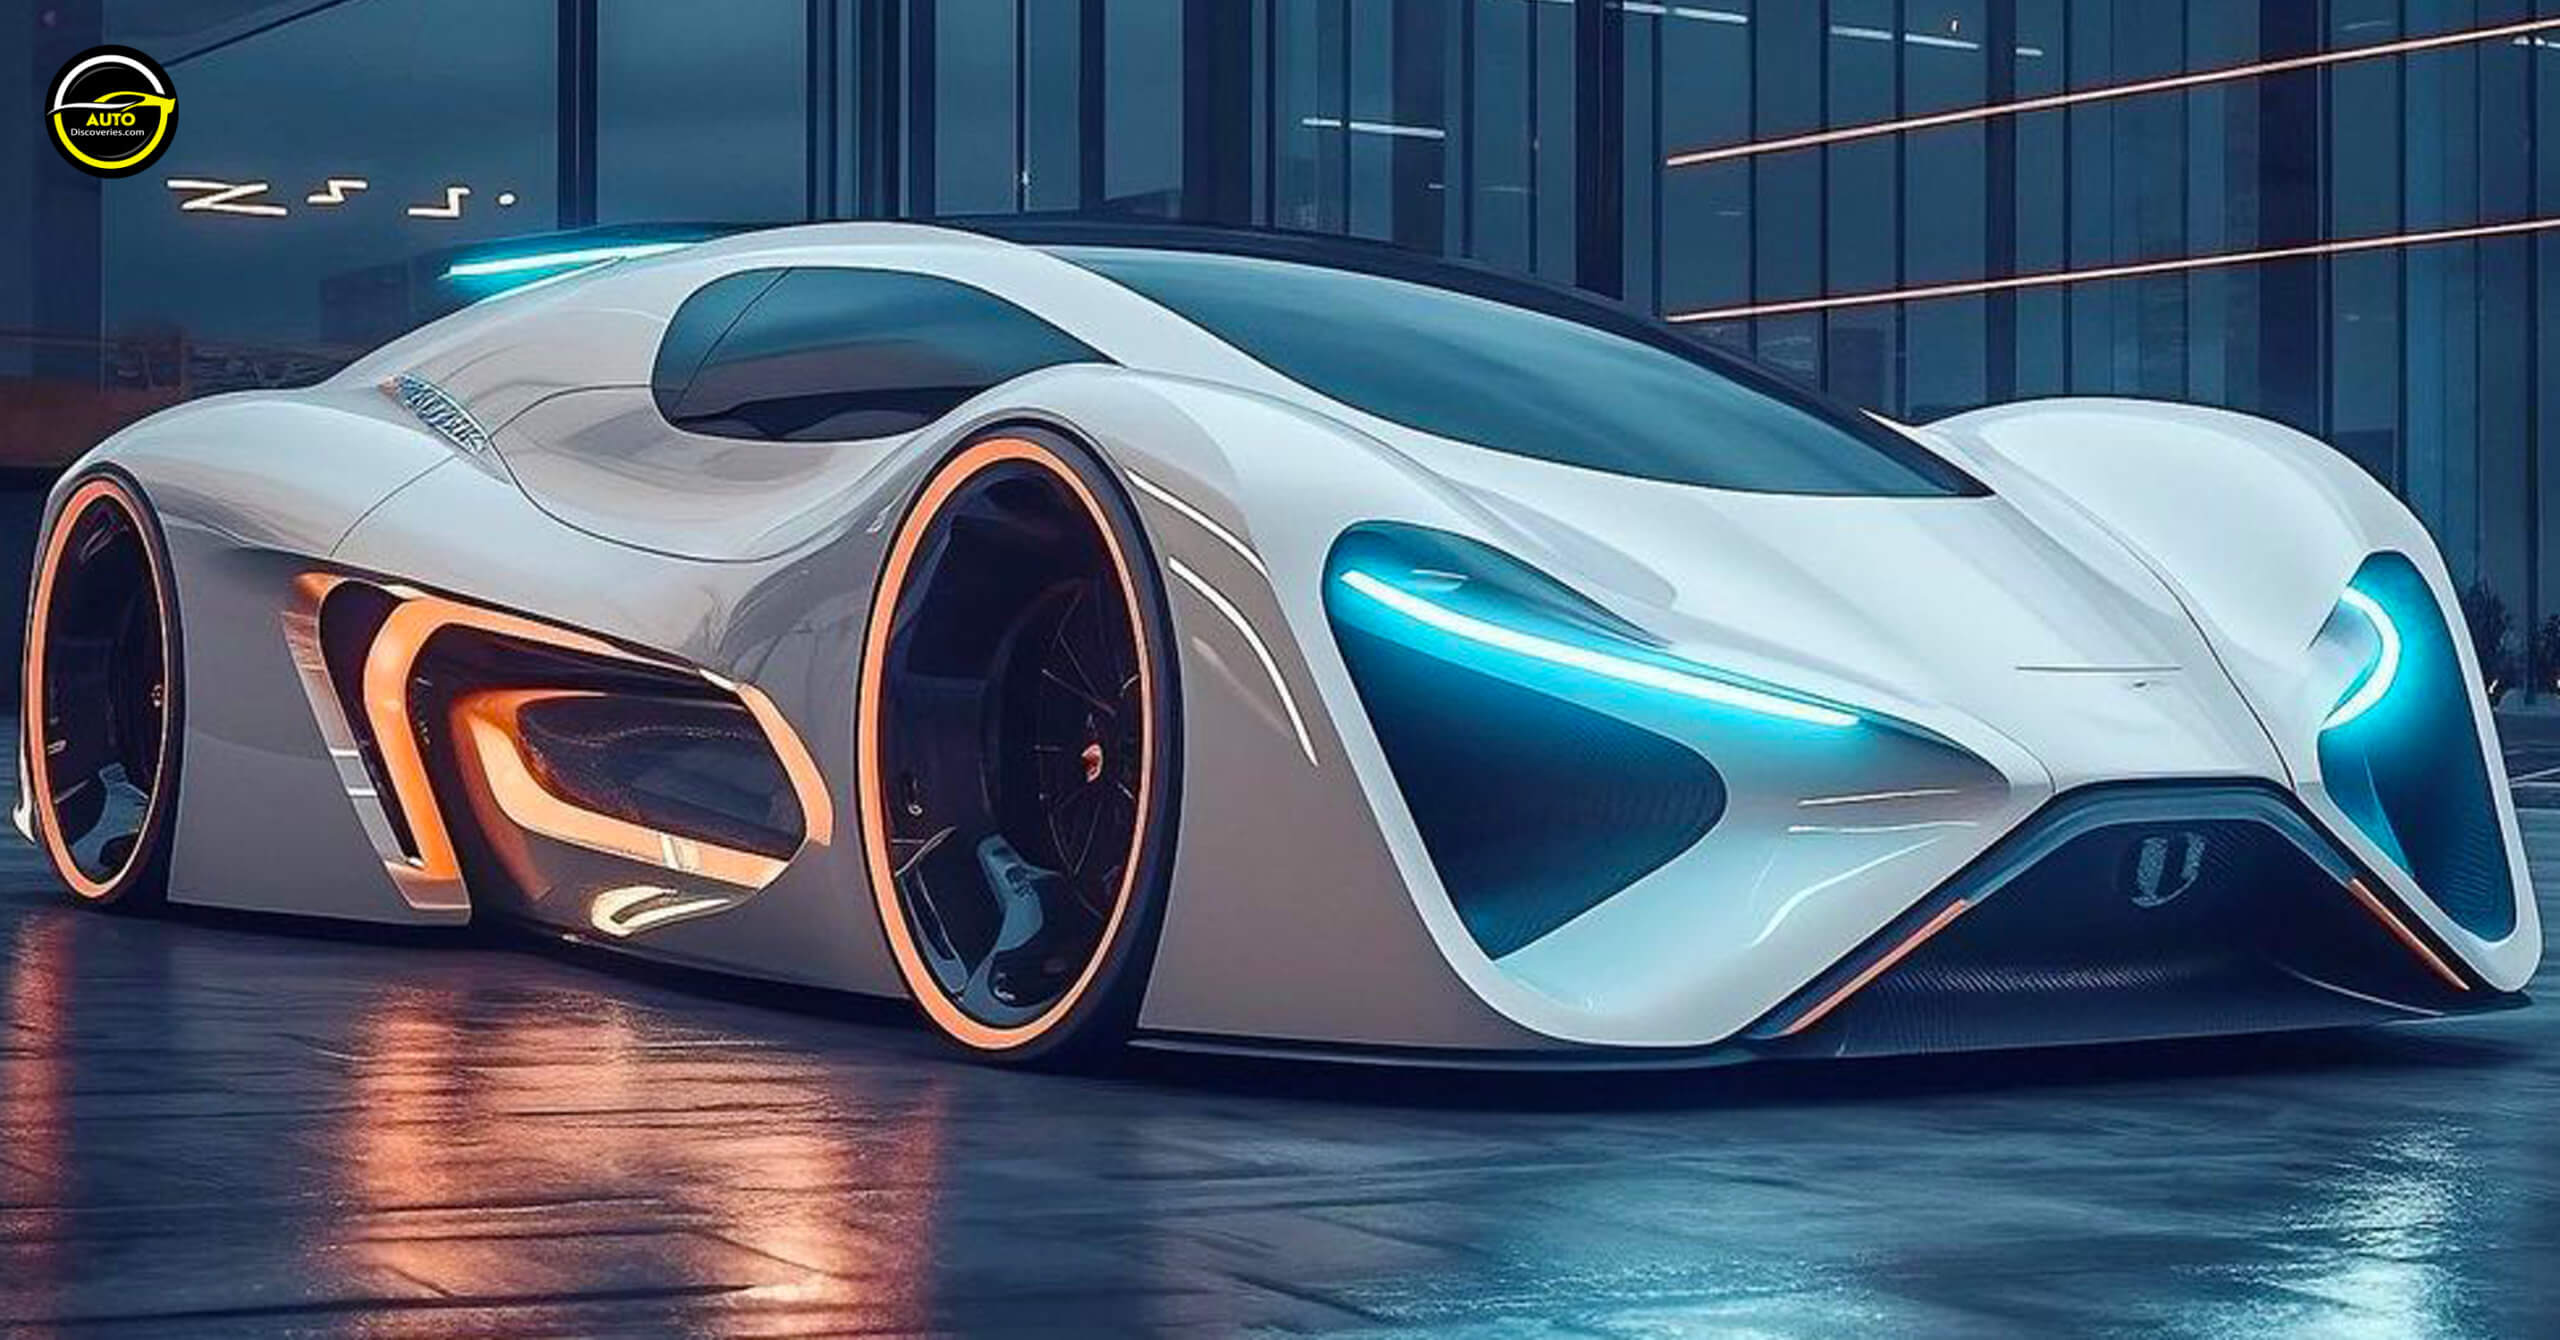 McLaren Hybrid Hypercar Concept by Coldstar Art scaled